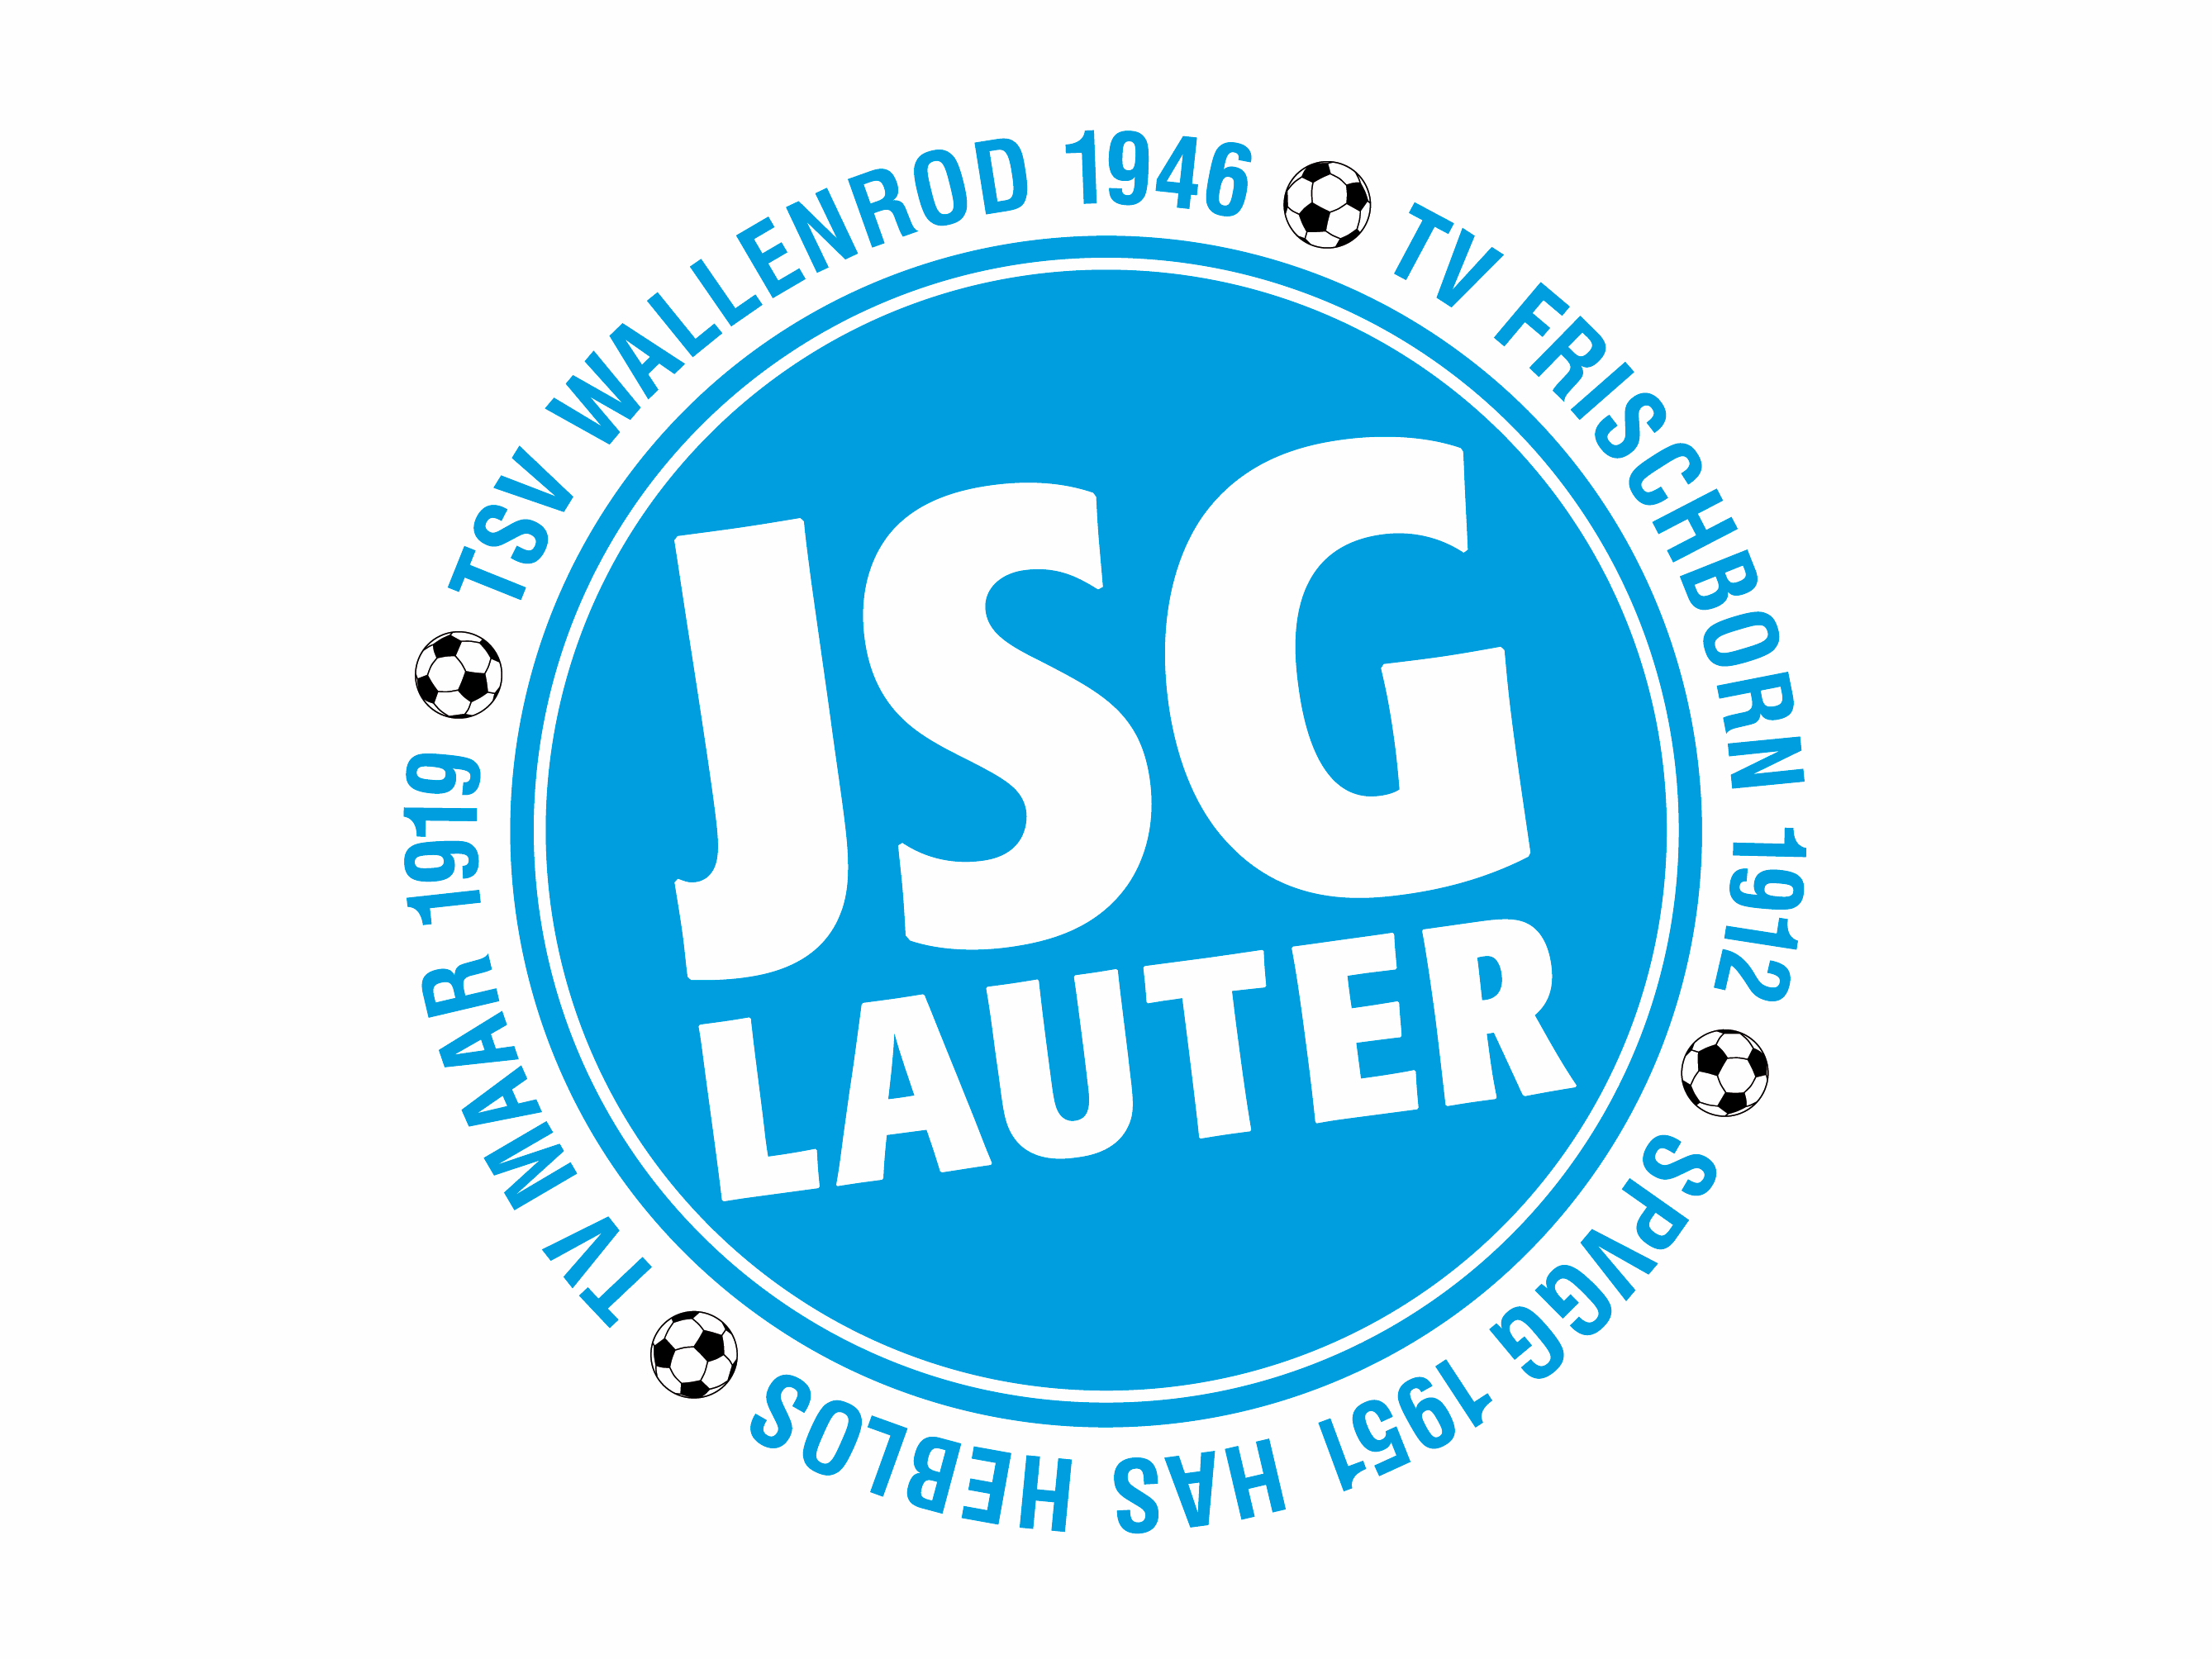 JSG-Lauter Turnier